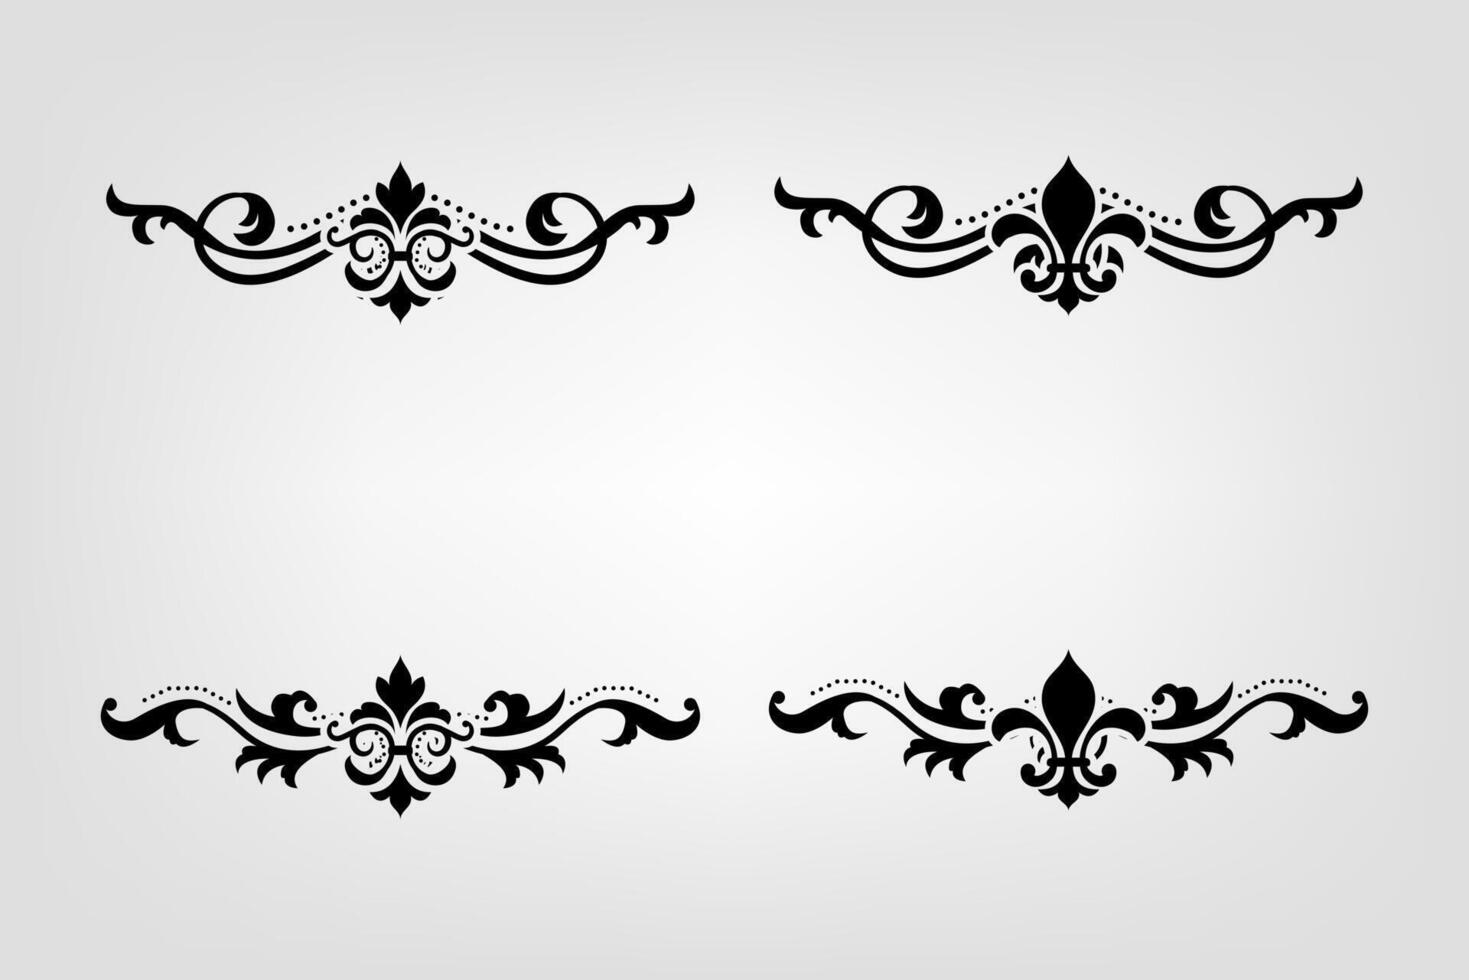 texto separador barroco decorar divisor libro tipografía ornamento diseño elementos Clásico divisor formas frontera ilustración vector